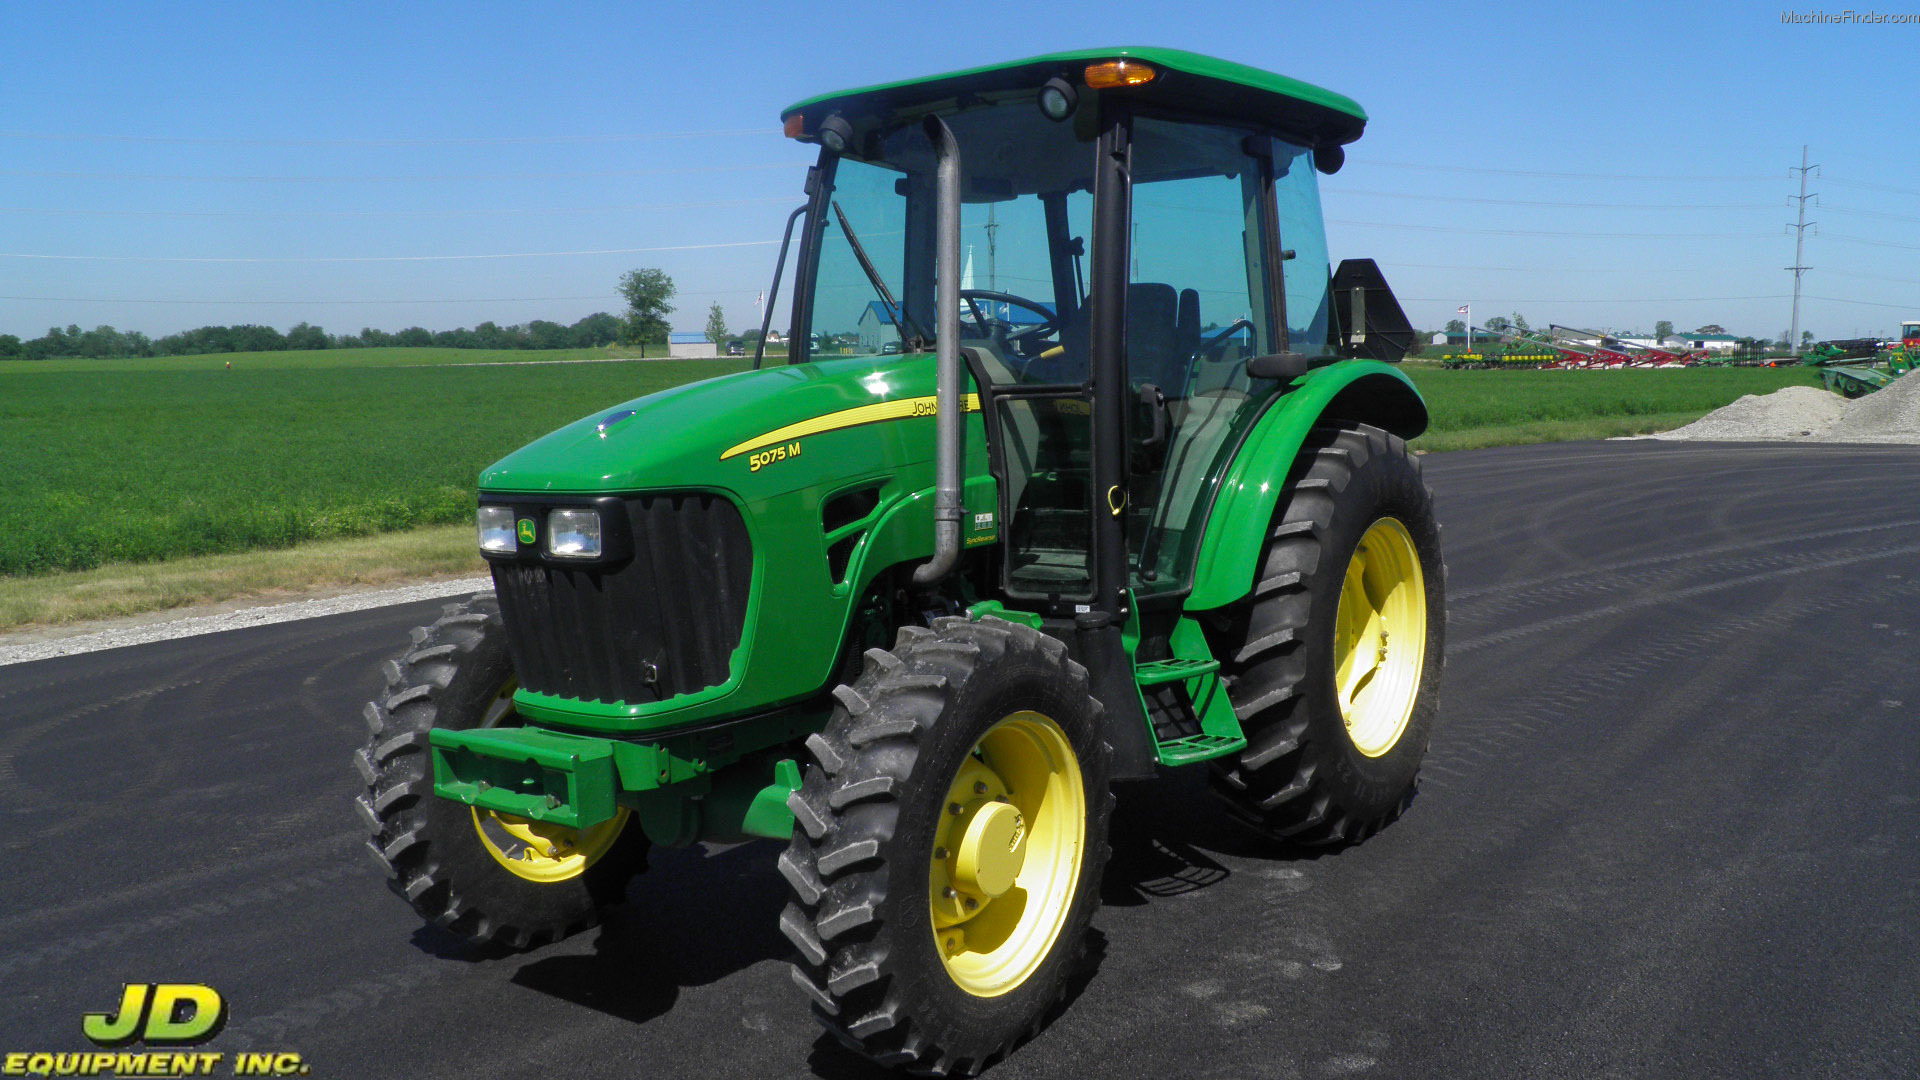 2010 John Deere 5075M Tractors - Utility (40-100hp) - John Deere ...